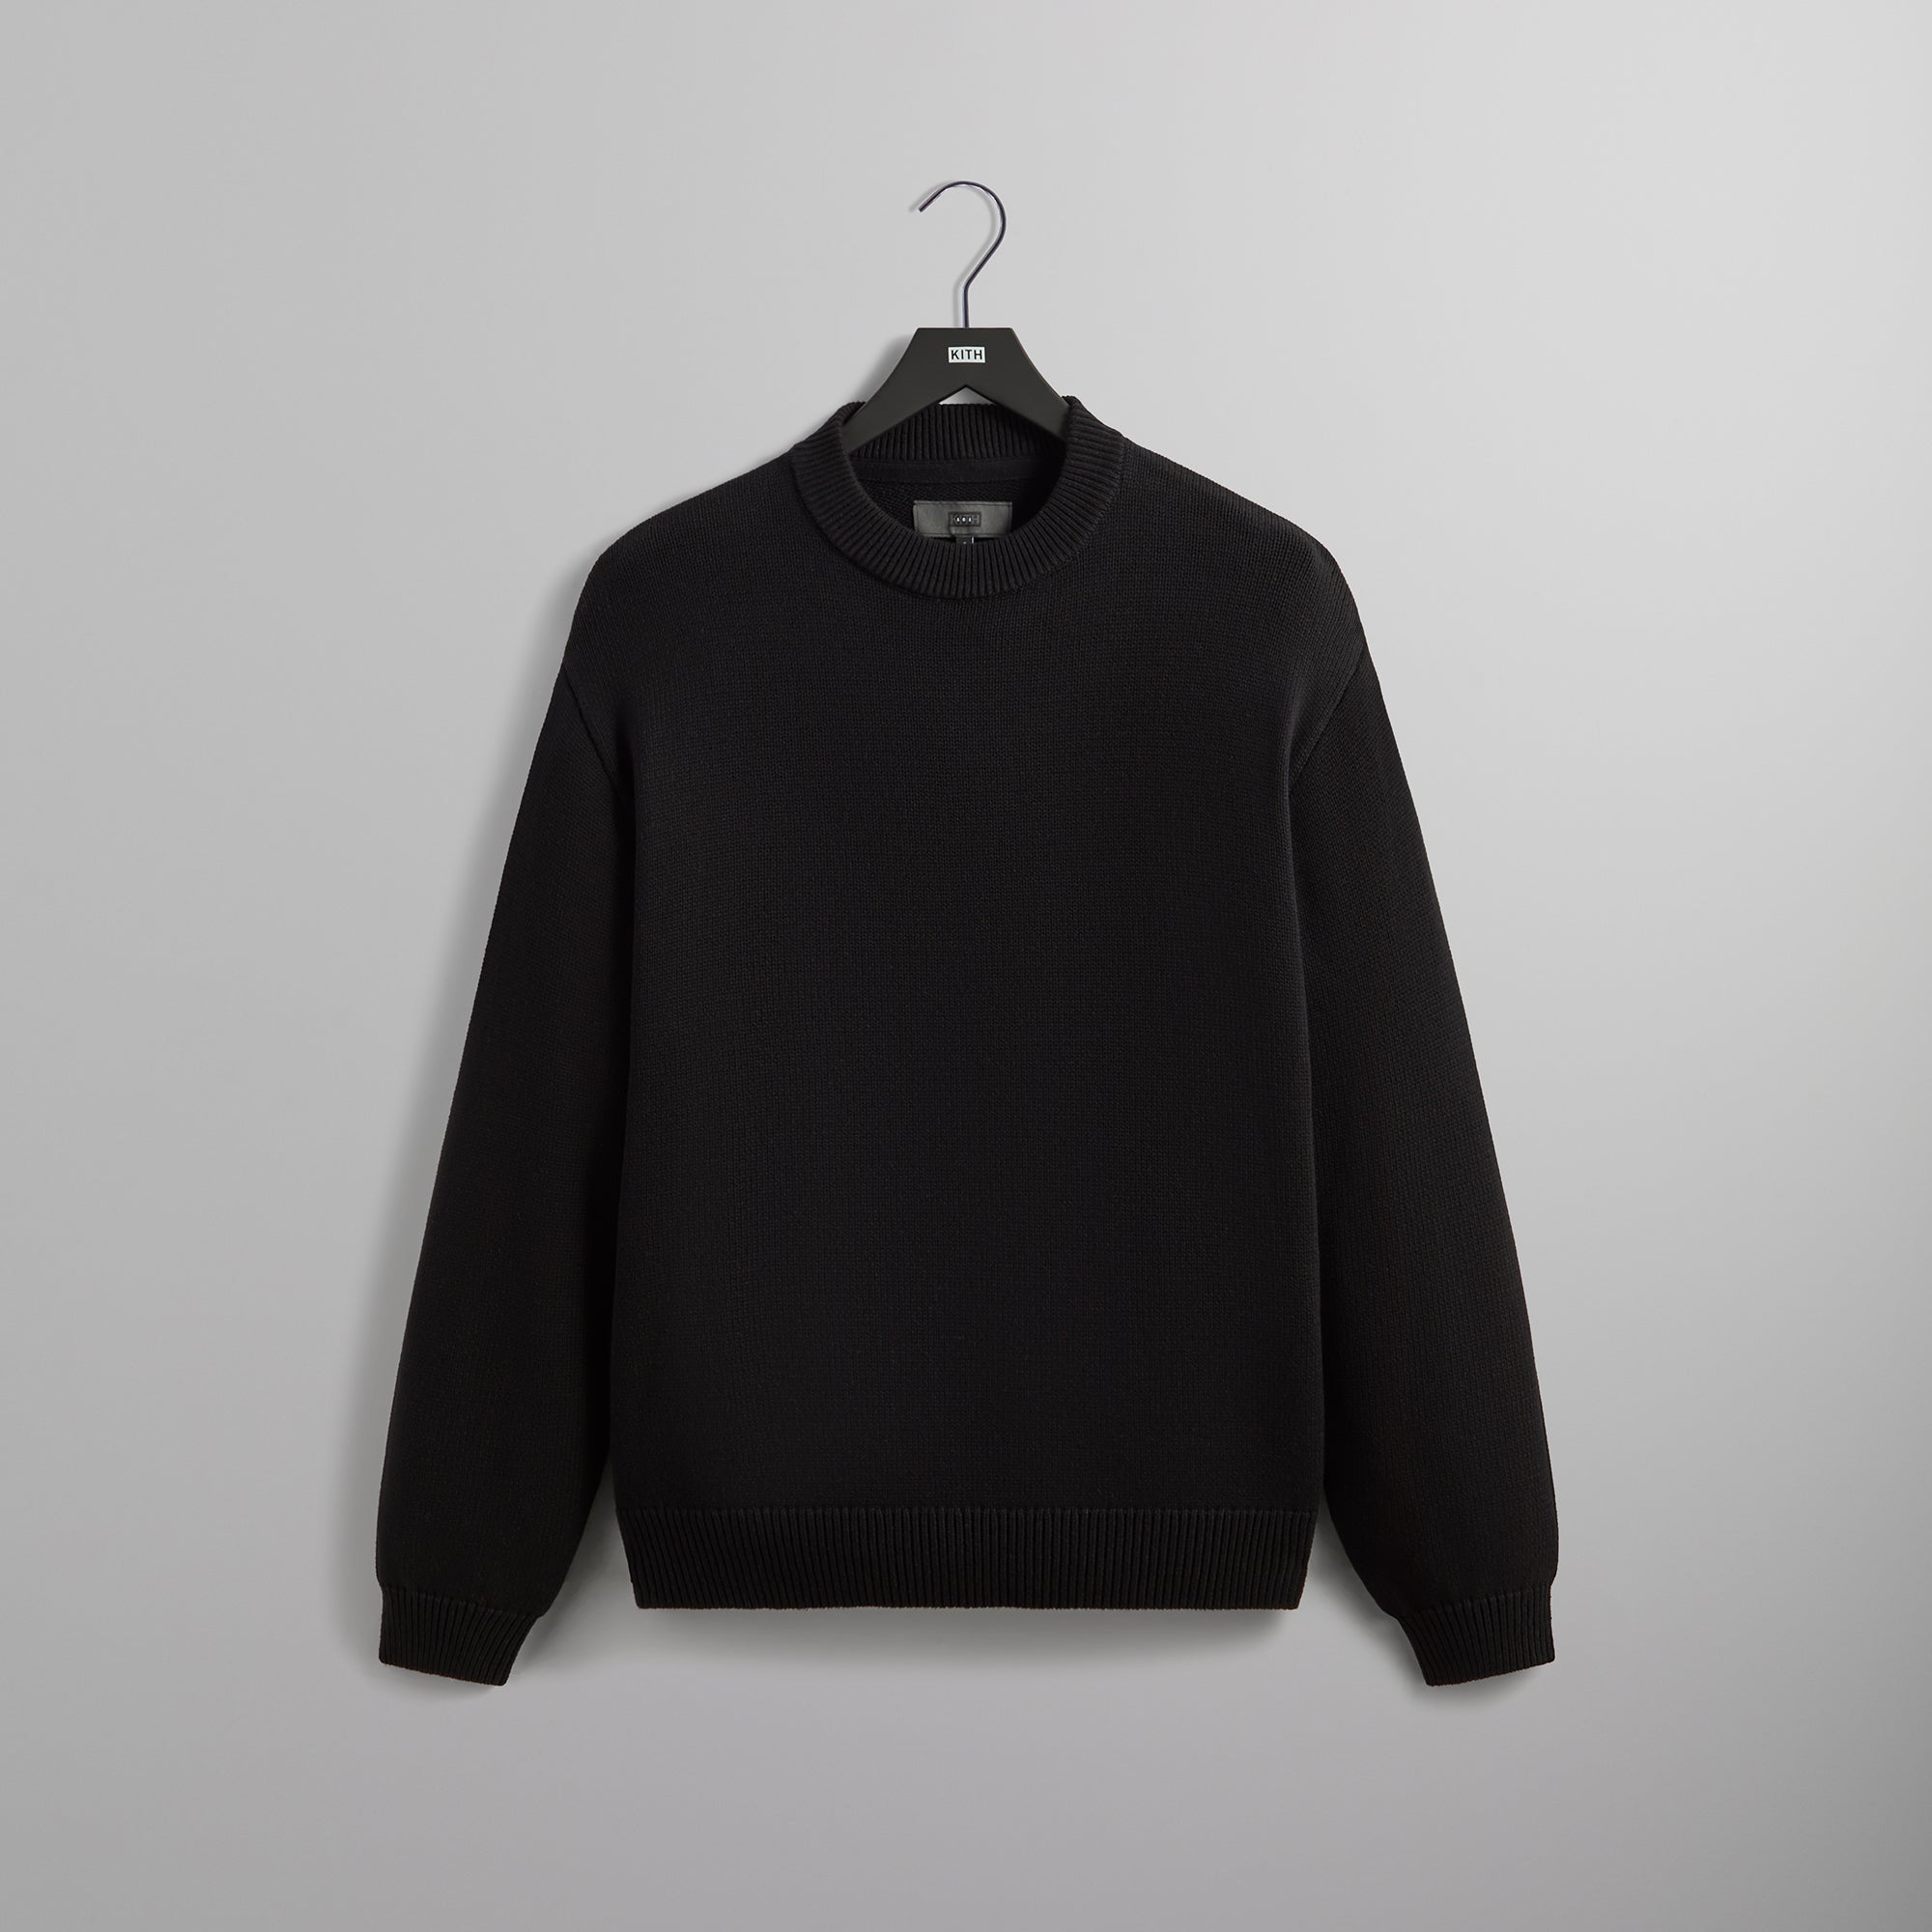 Kith Lewis Sweater - Black